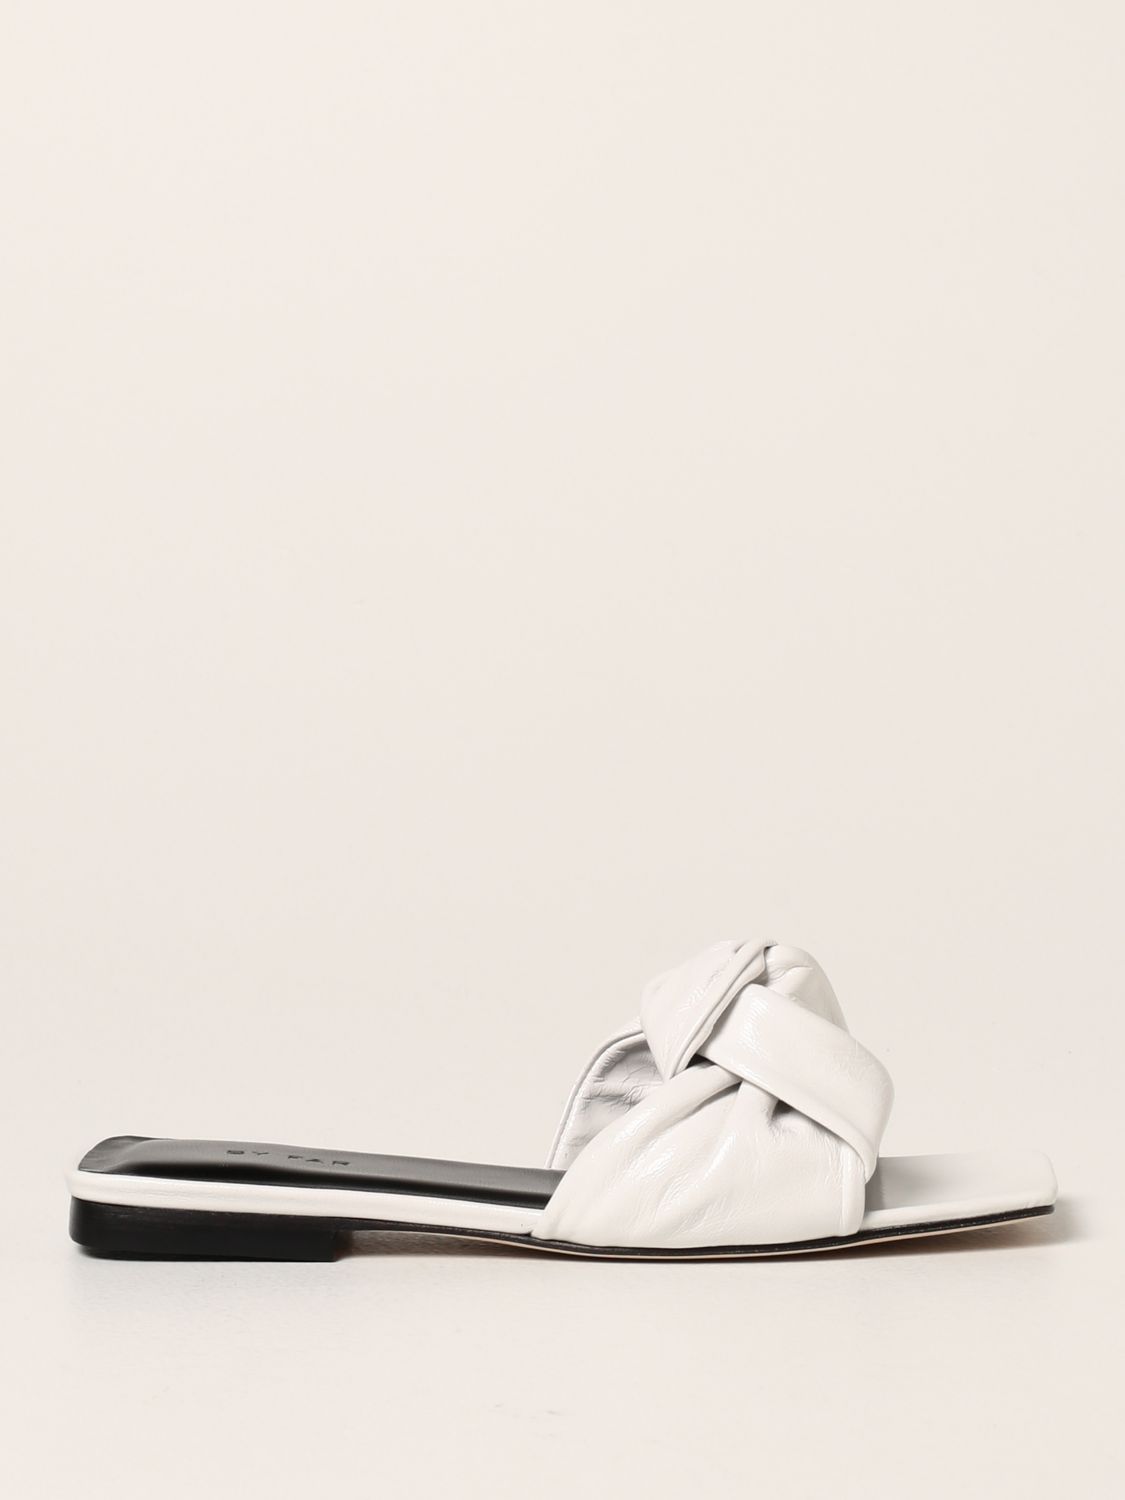 Sandalias planas By Far: Zapatos mujer By Far blanco 1